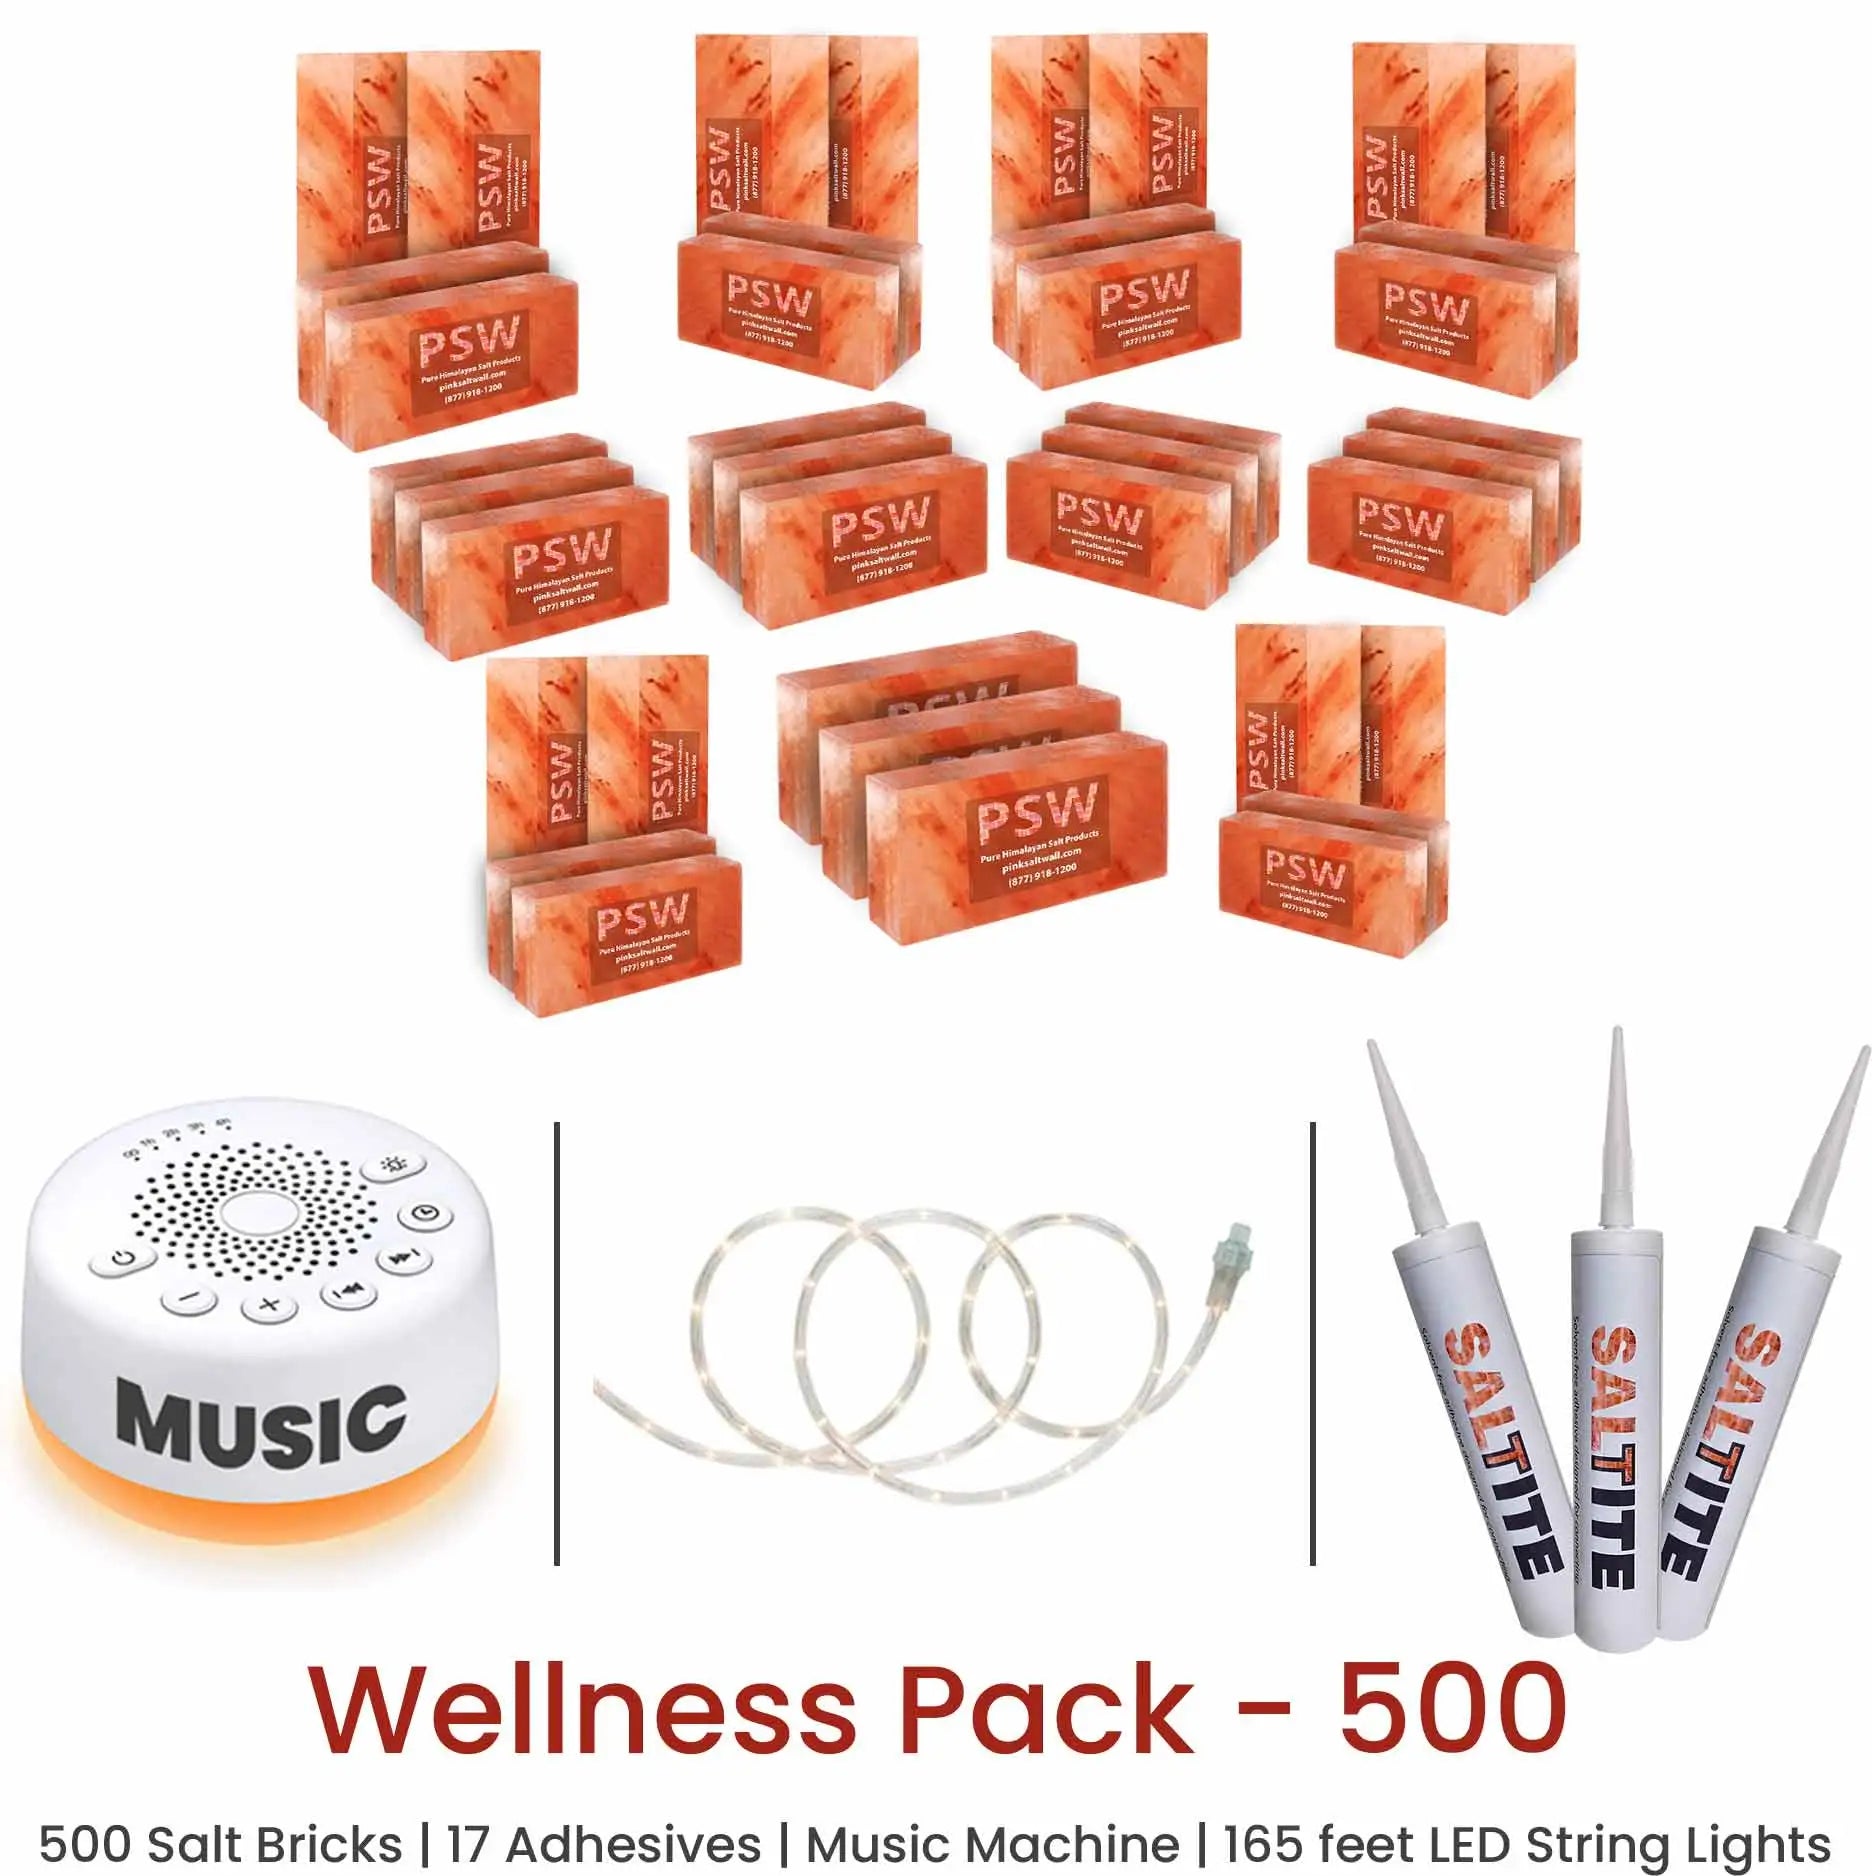 Wellness Pack - 500